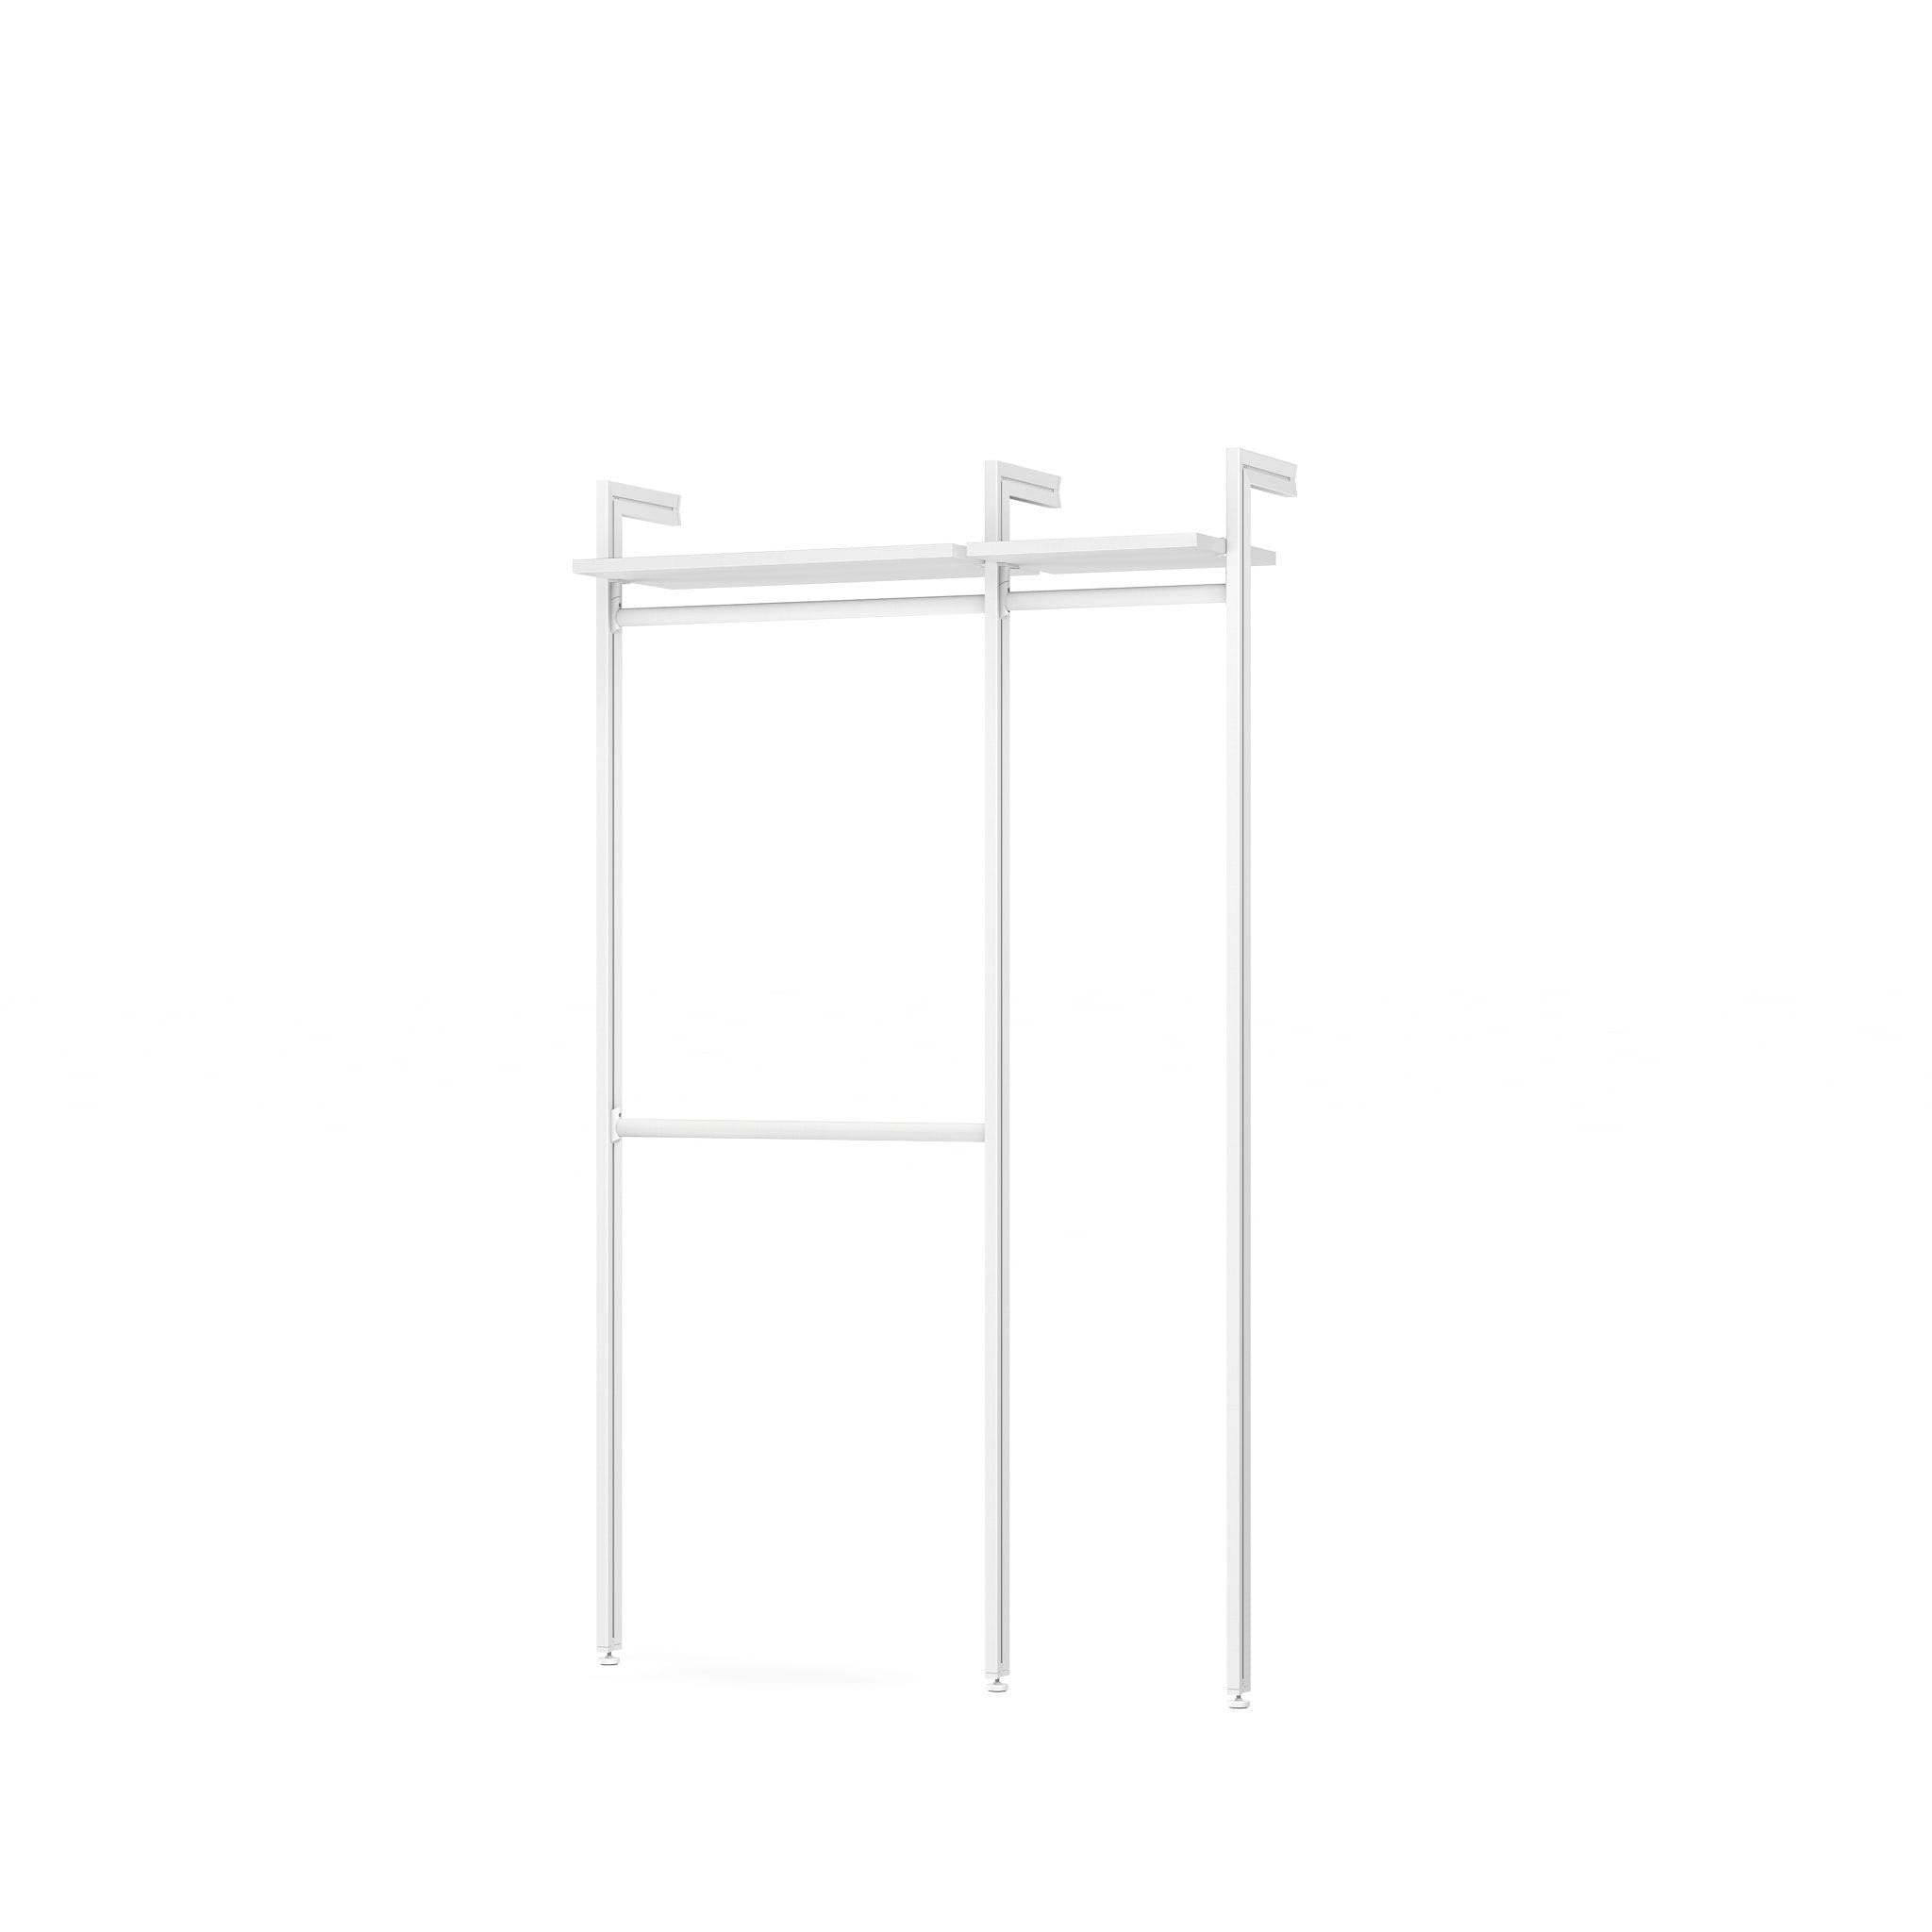 CLOS-IT: Modular Closet Wardrobe Storage – Shelf & Co.